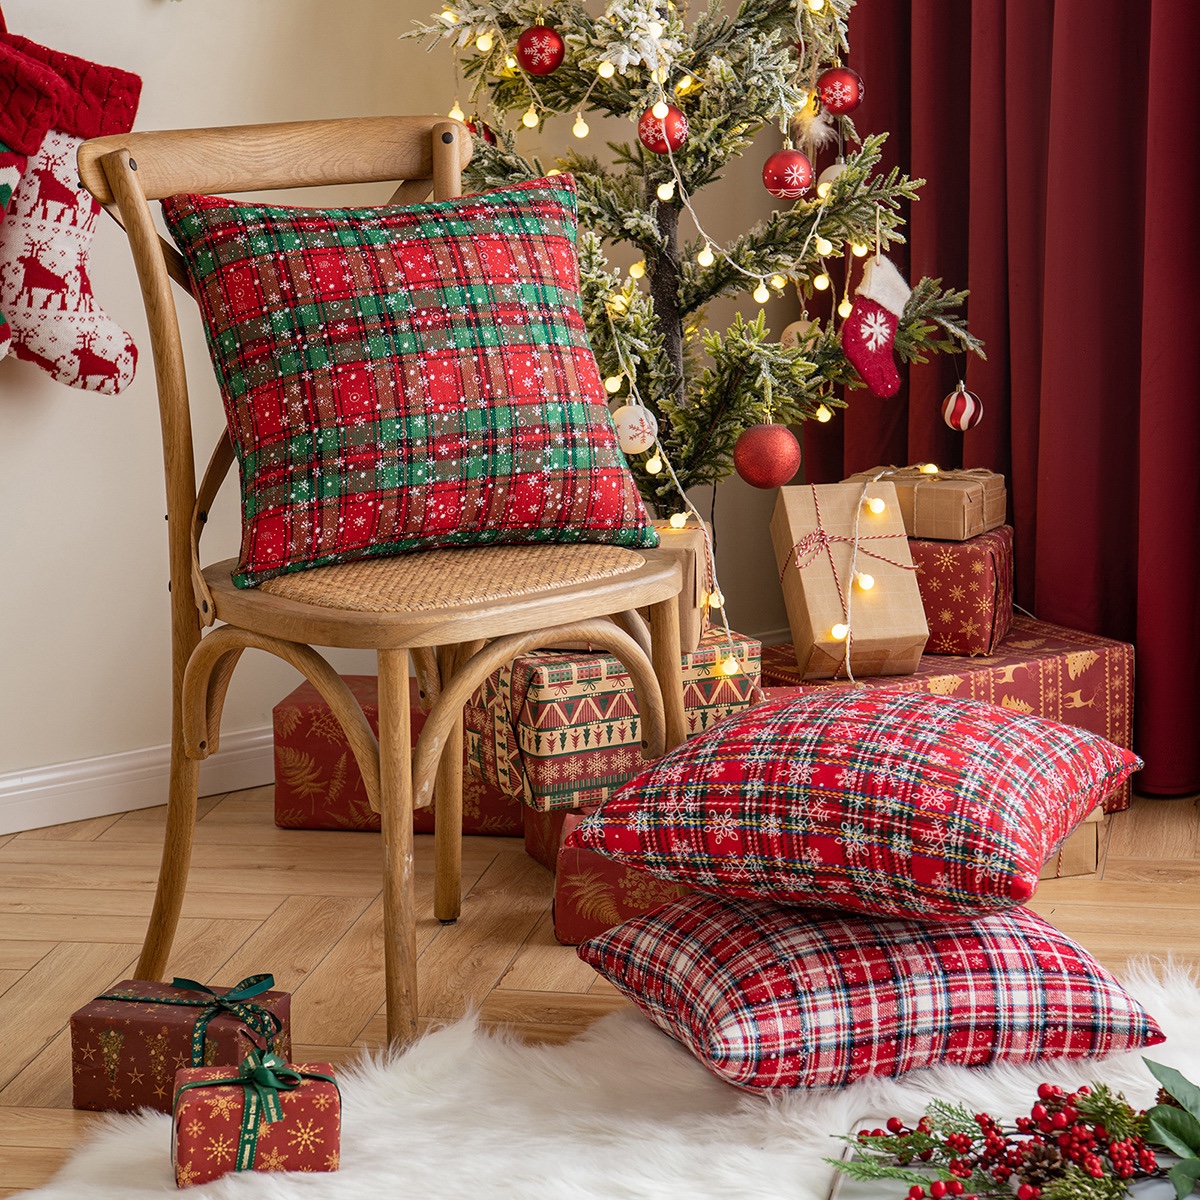 cistmas pid pillow red festive pillowcase snowfke pillow cover birthday party decoration vintage stripe cushion